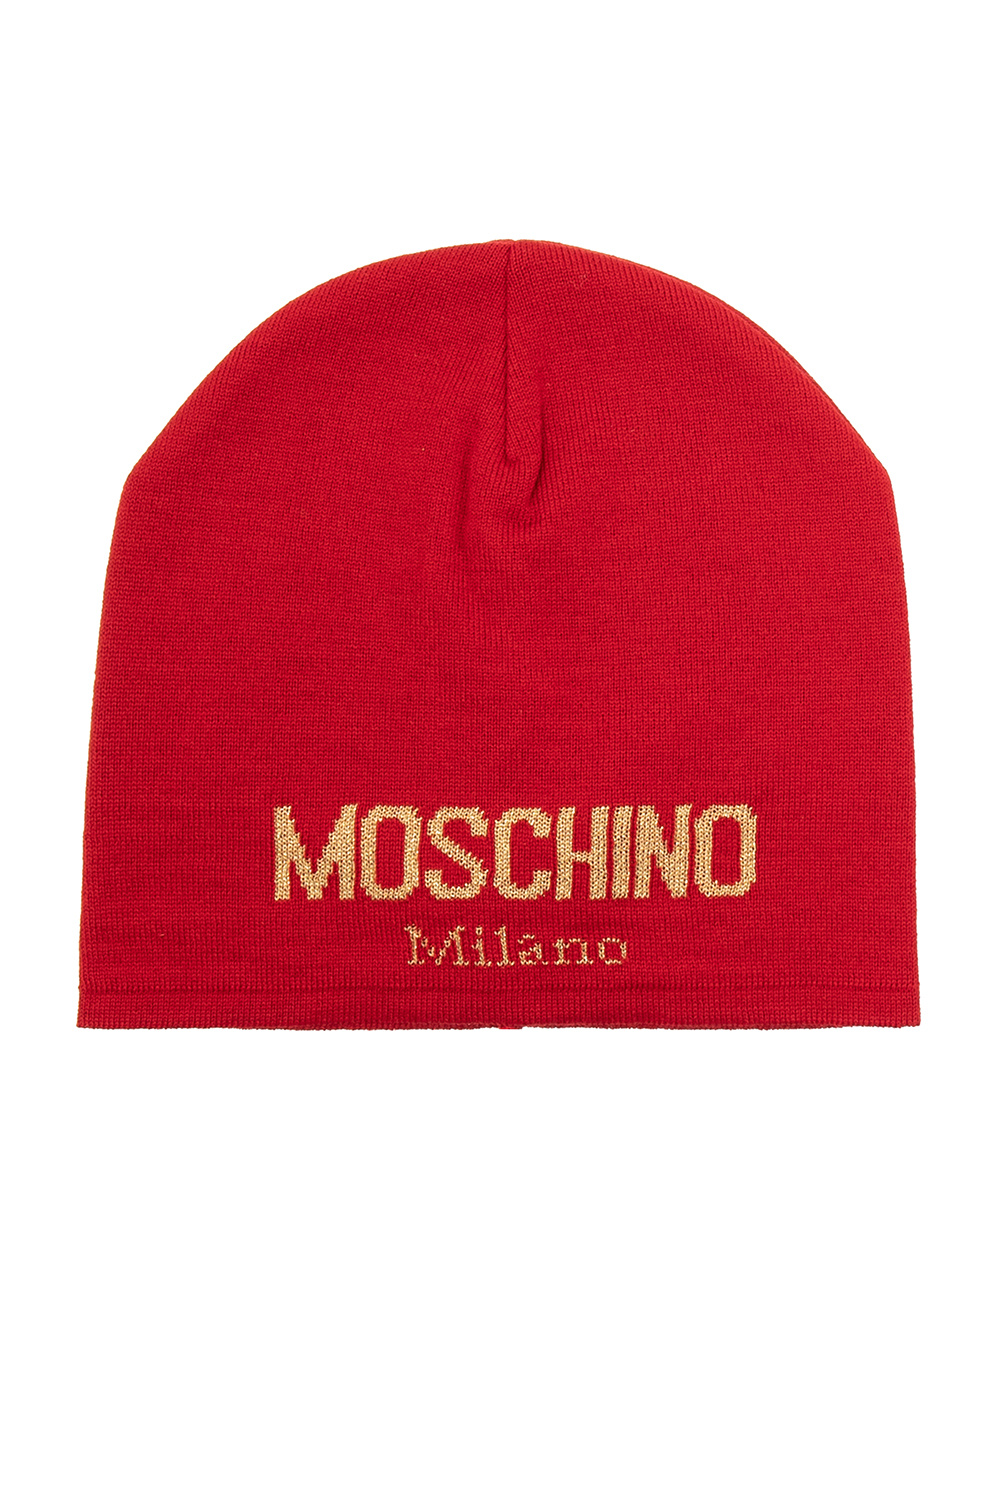 Moschino Chapeaux Hat You